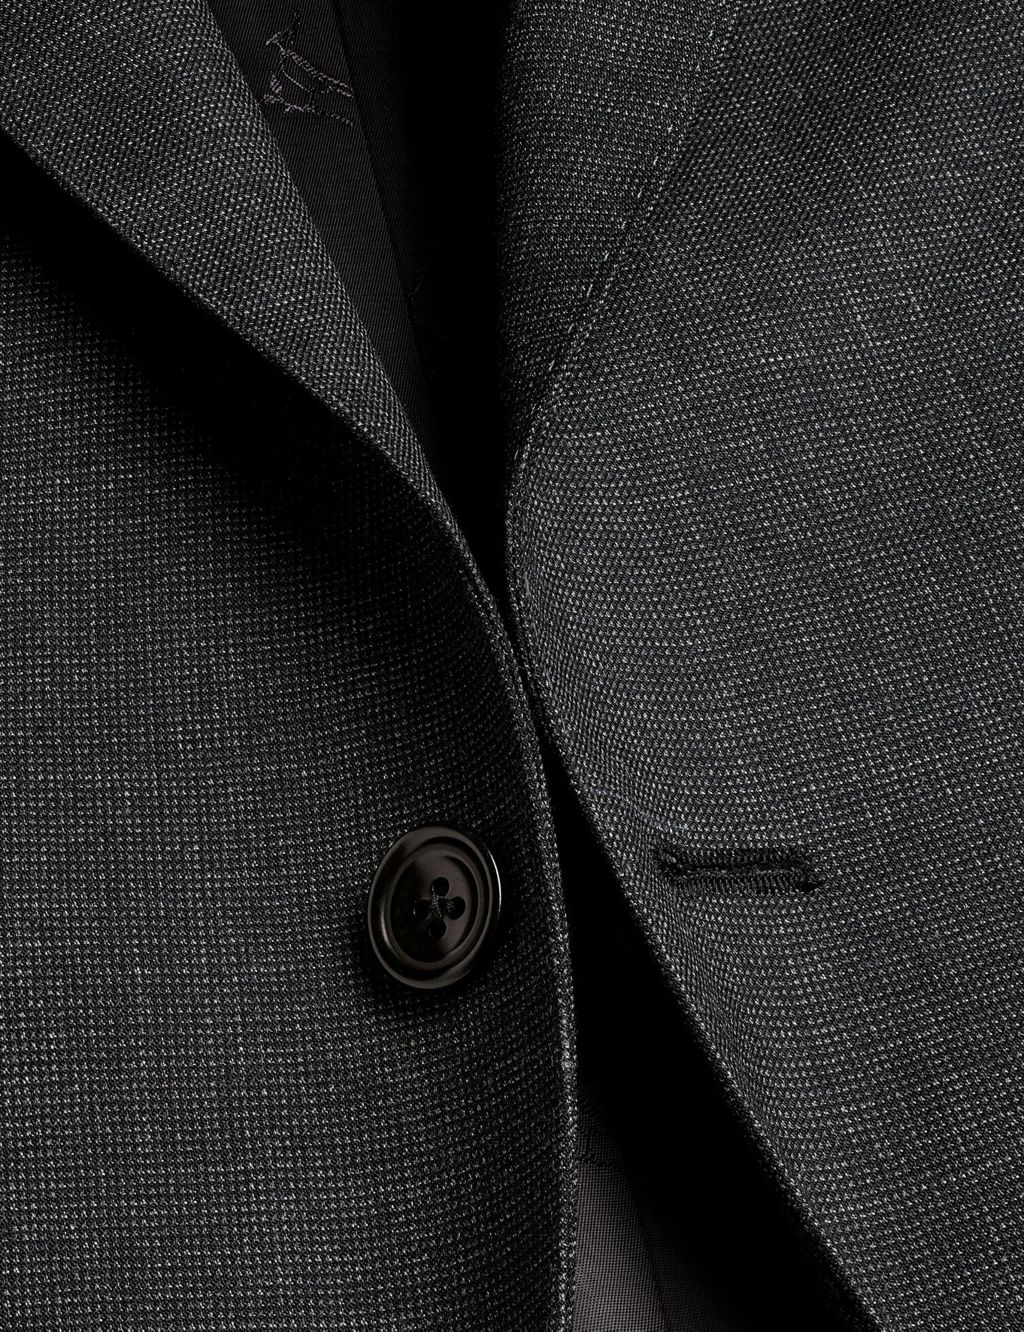 Slim Fit Super 120s Wool Suit Jacket | Charles Tyrwhitt | M&S